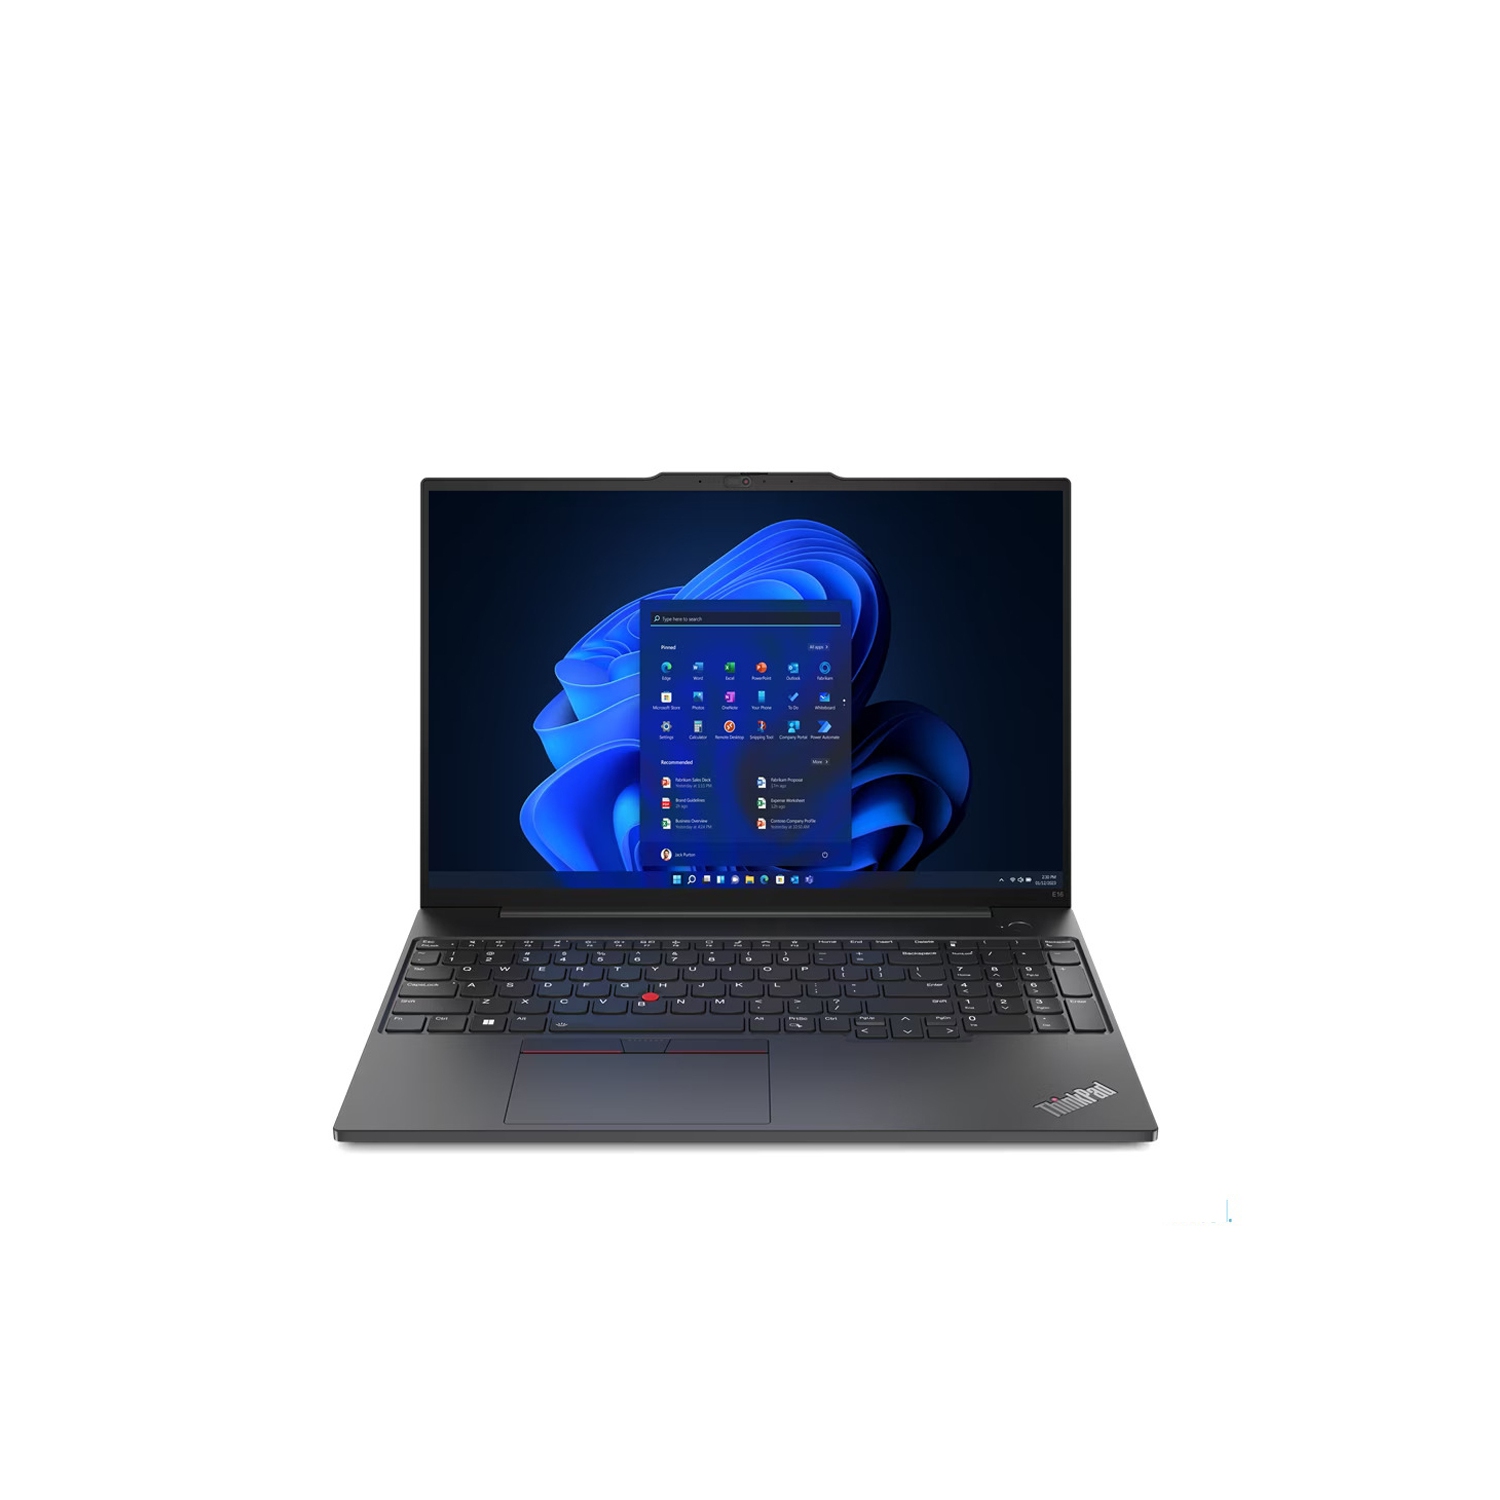 Lenovo ThinkPad E15 Gen 3, AMD Ryzen 5 5500U, 16GB RAM, 256GB SSD Storage, Win10 Pro